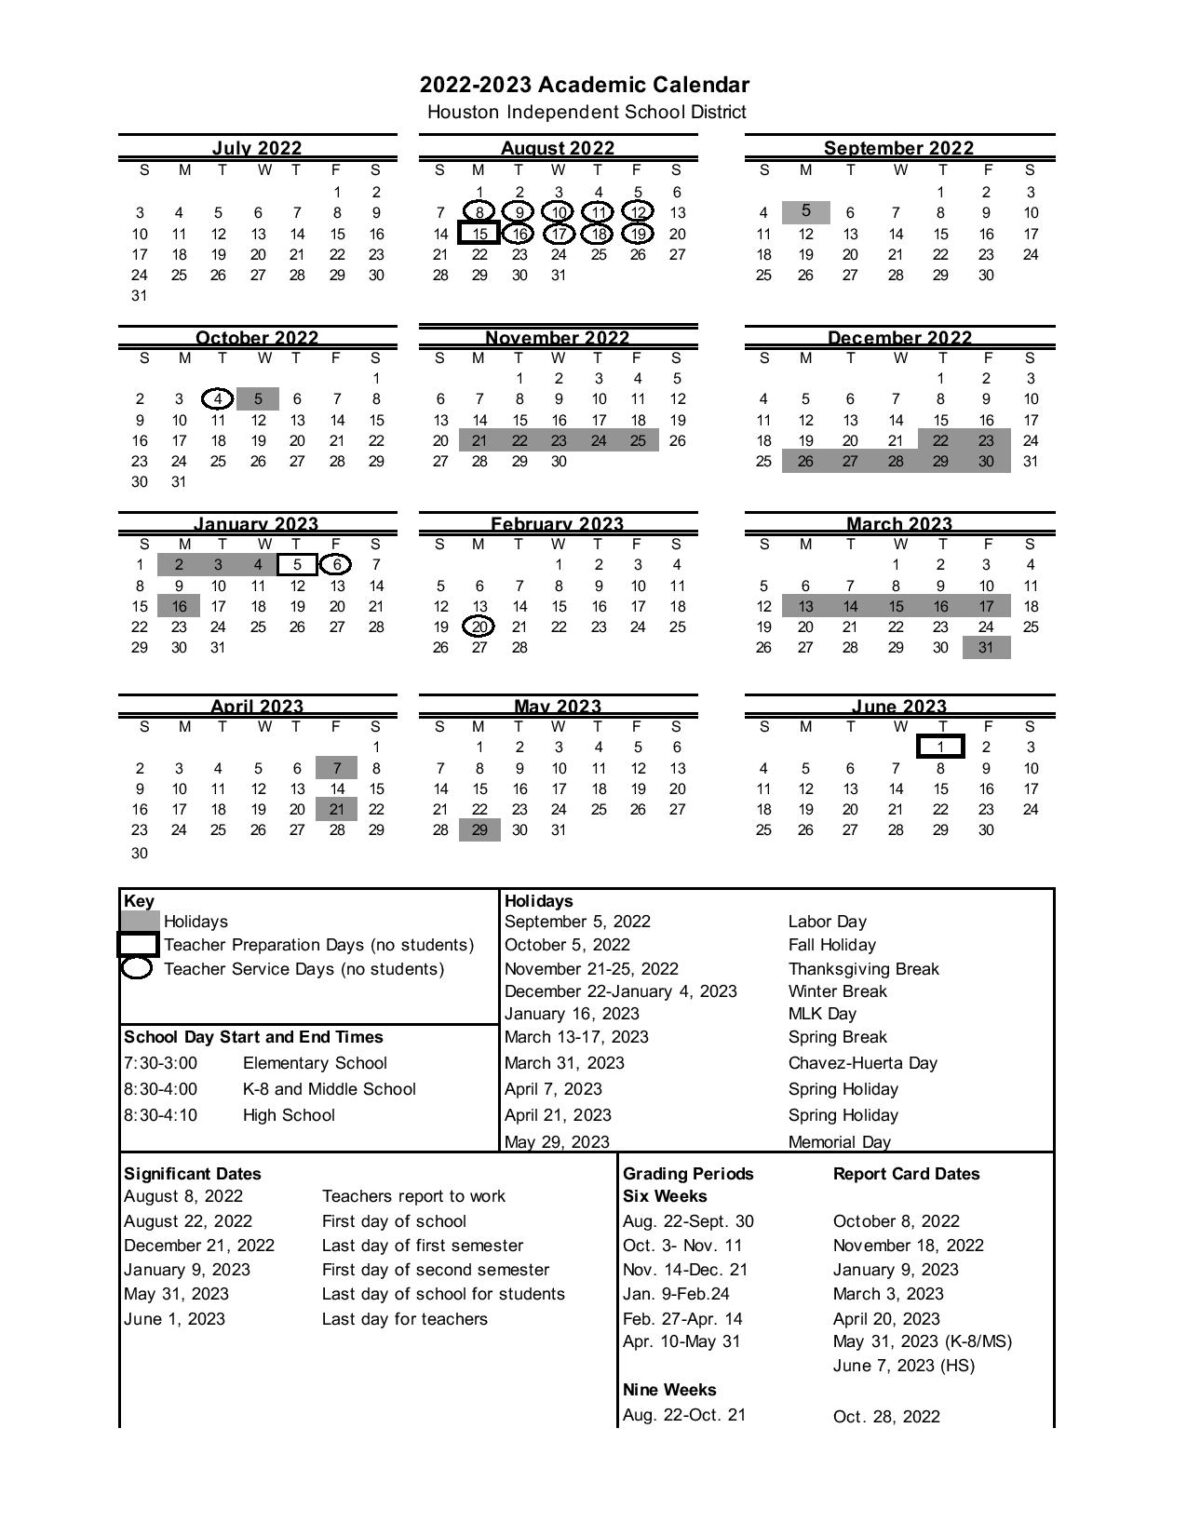 houston-independent-school-district-calendar-2022-2023-pdf